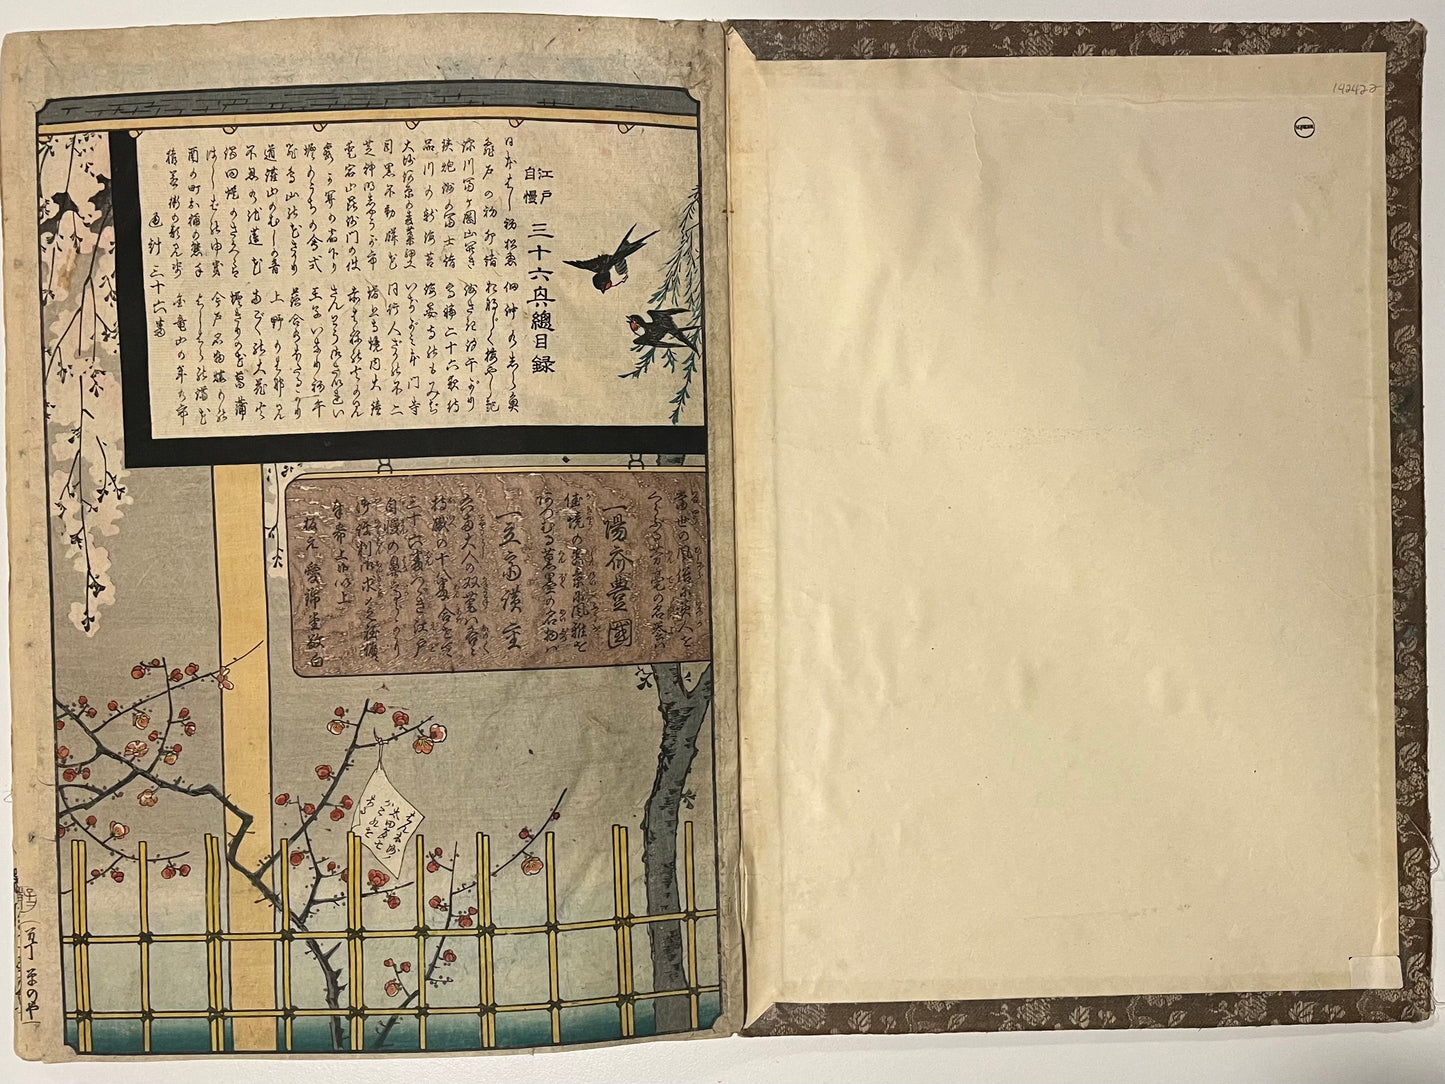 Thirty six Edo interests - Hiroshige II and Kunisada - 1864 - 32 prints and title page - Silk bound album